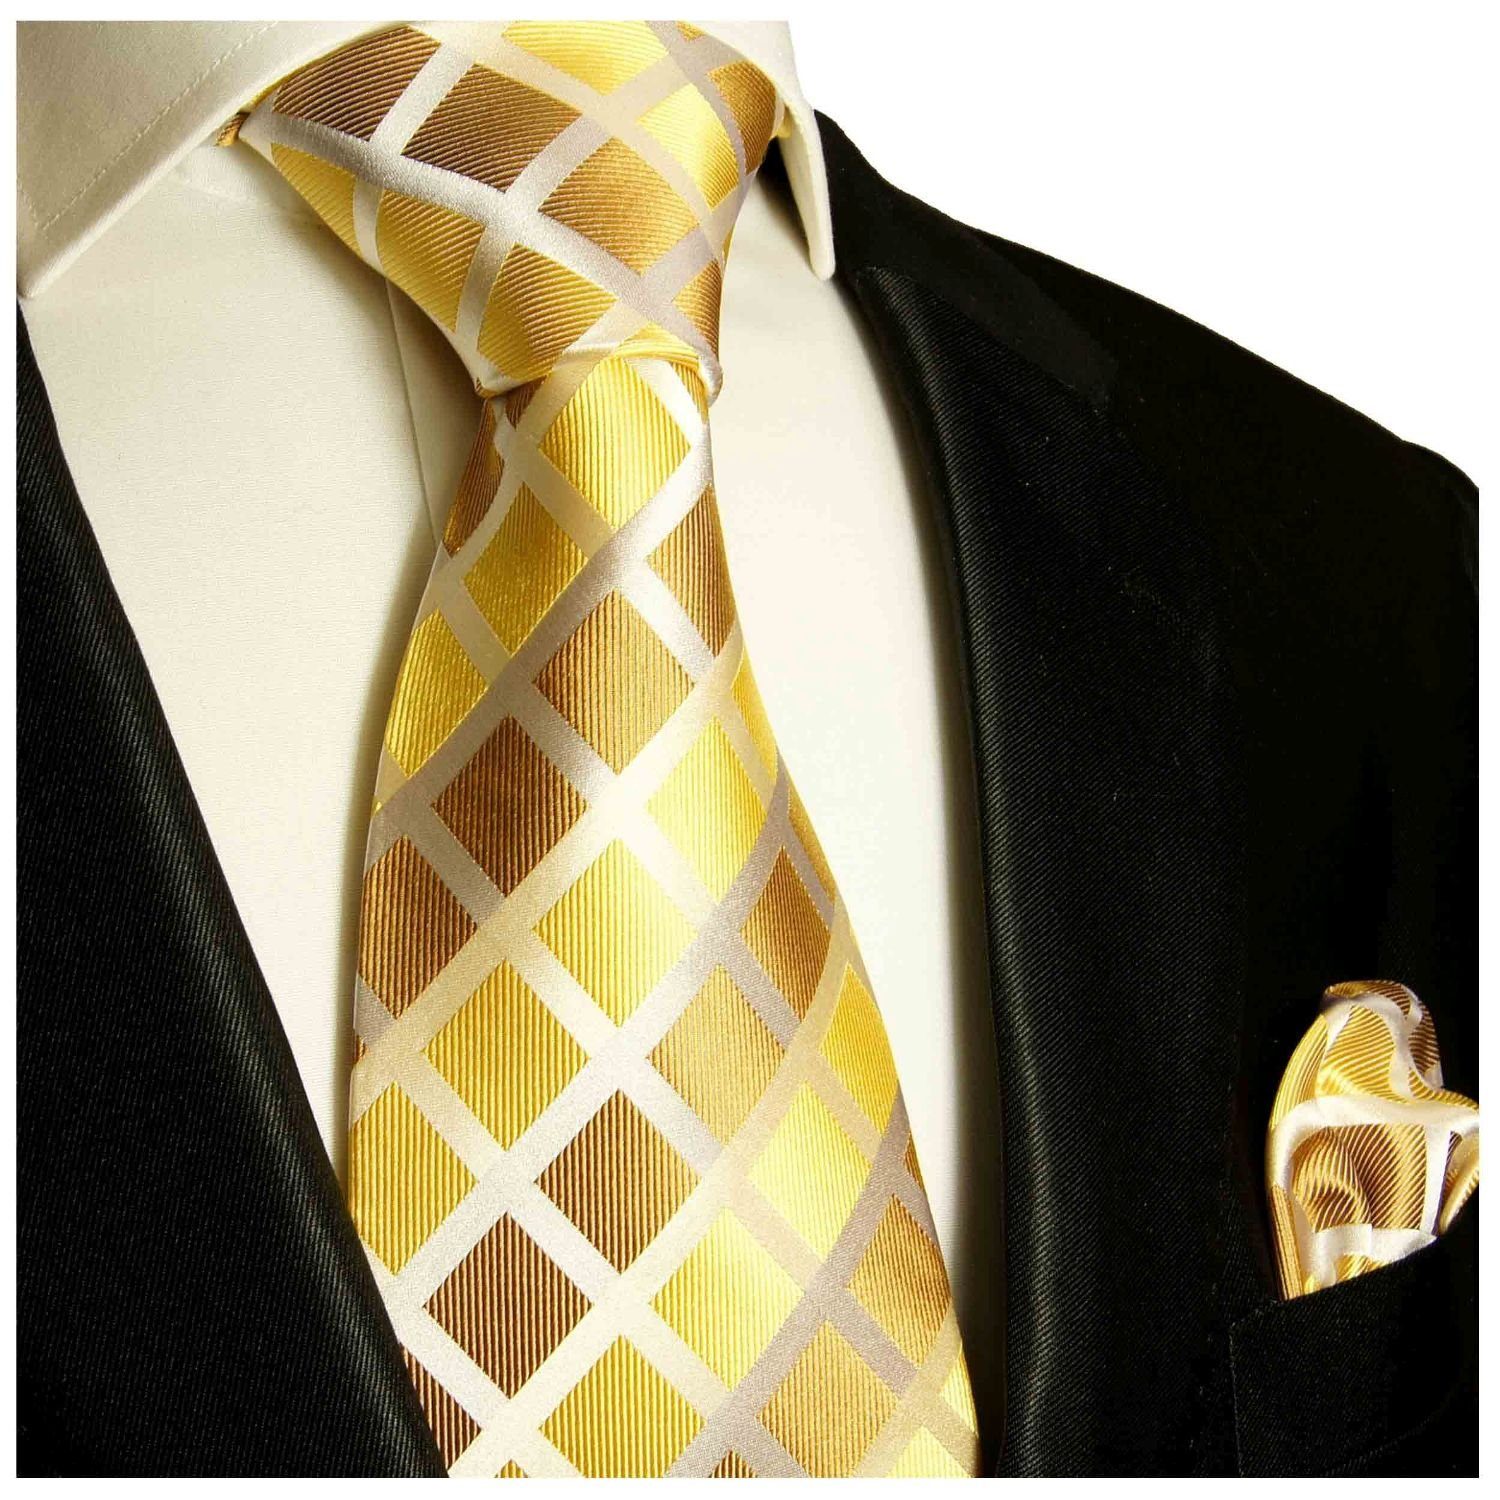 CRIXUS schmale Krawatte Orange Edel Satin Tuch 31x31 cm Anzug Smoking 